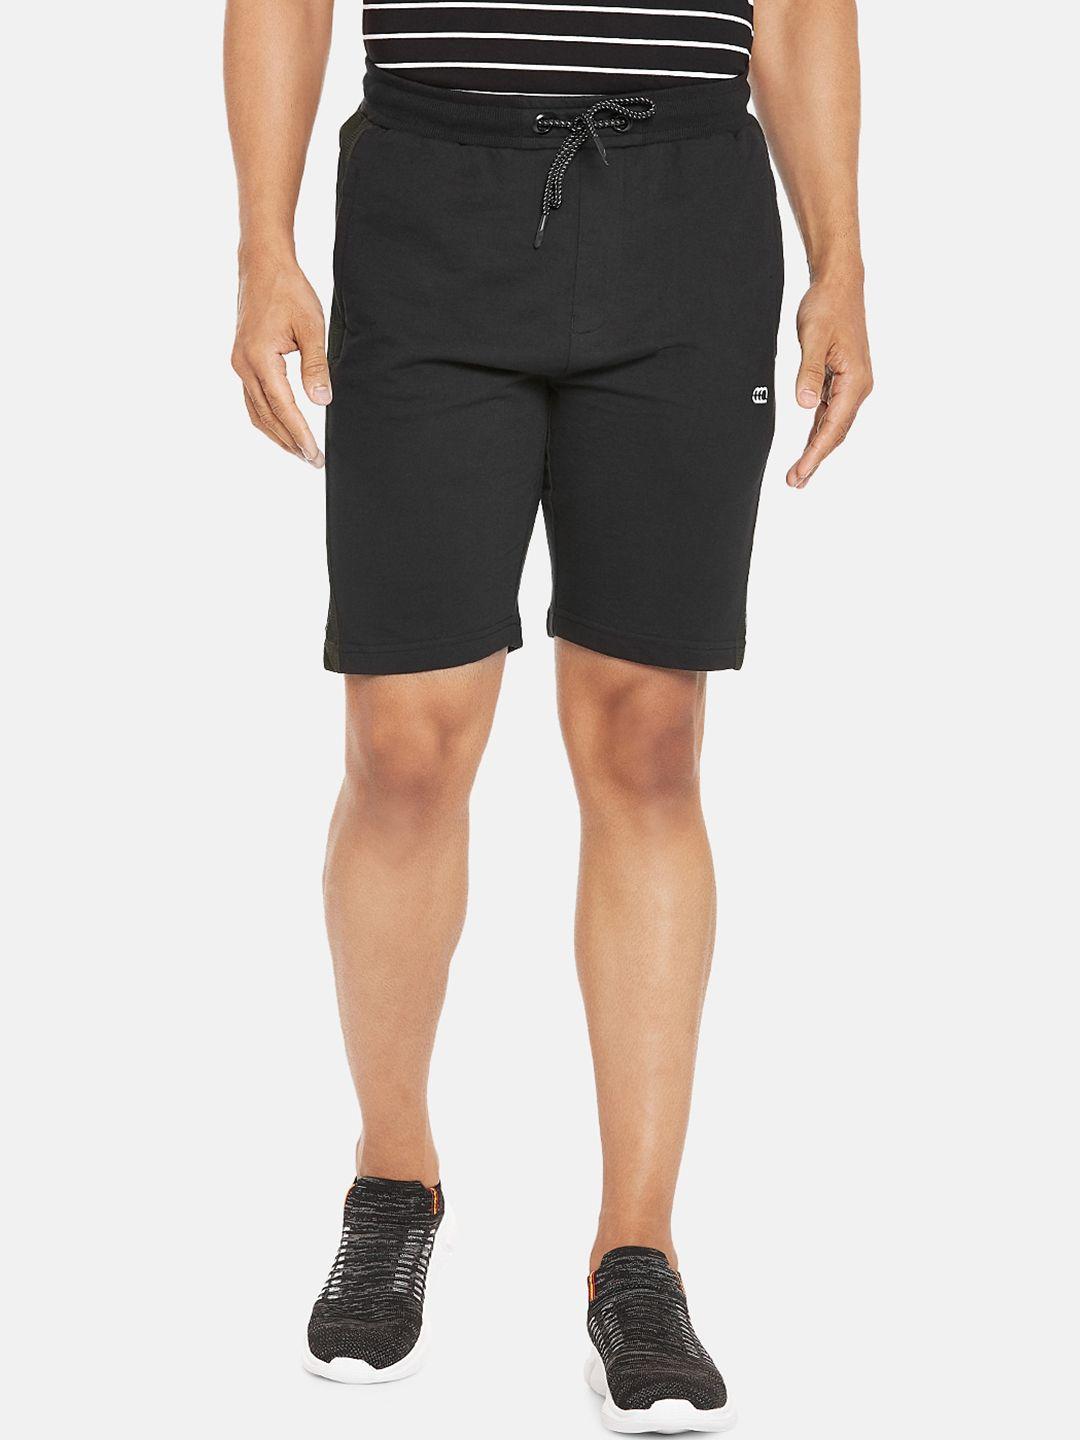 ajile-by-pantaloons-men-black-slim-fit-mid-rise-sports-shorts